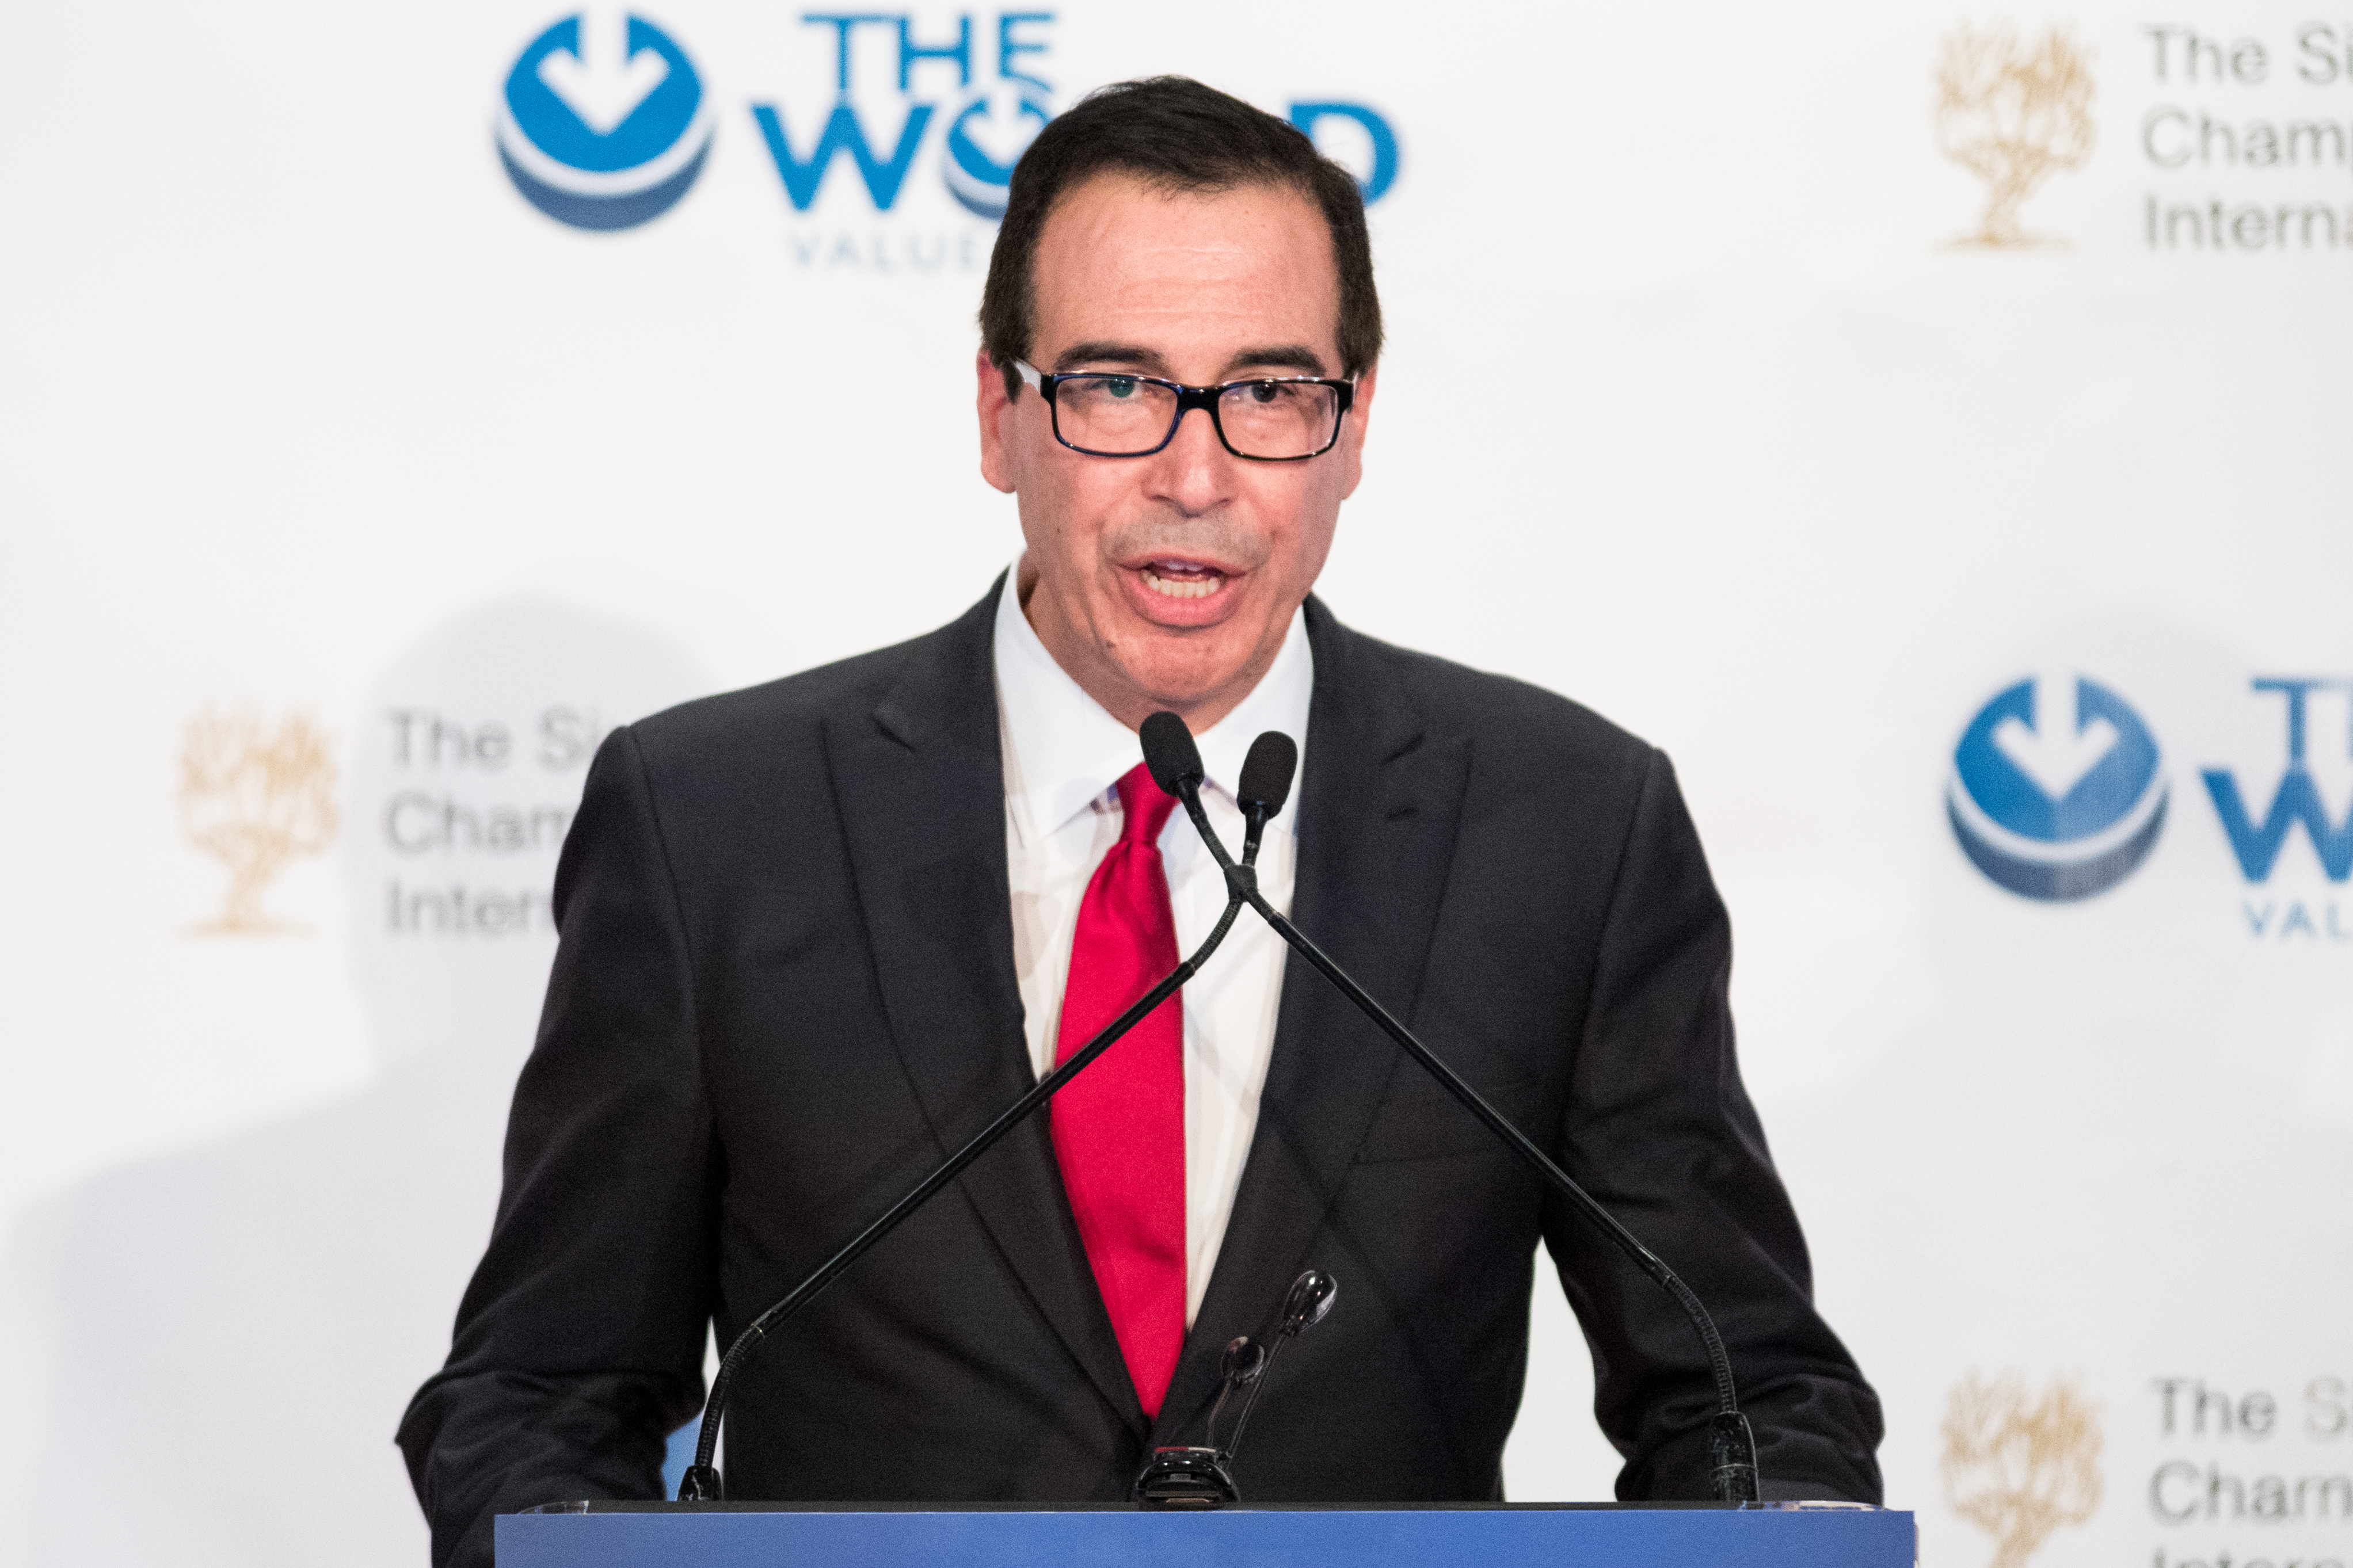 Steven Mnuchin, U.S. Secretary of the Treasury, speaking at the Champions of Jewish Values International Awards Gala in New York City. (SOPA Images—LightRocket via Getty Images)